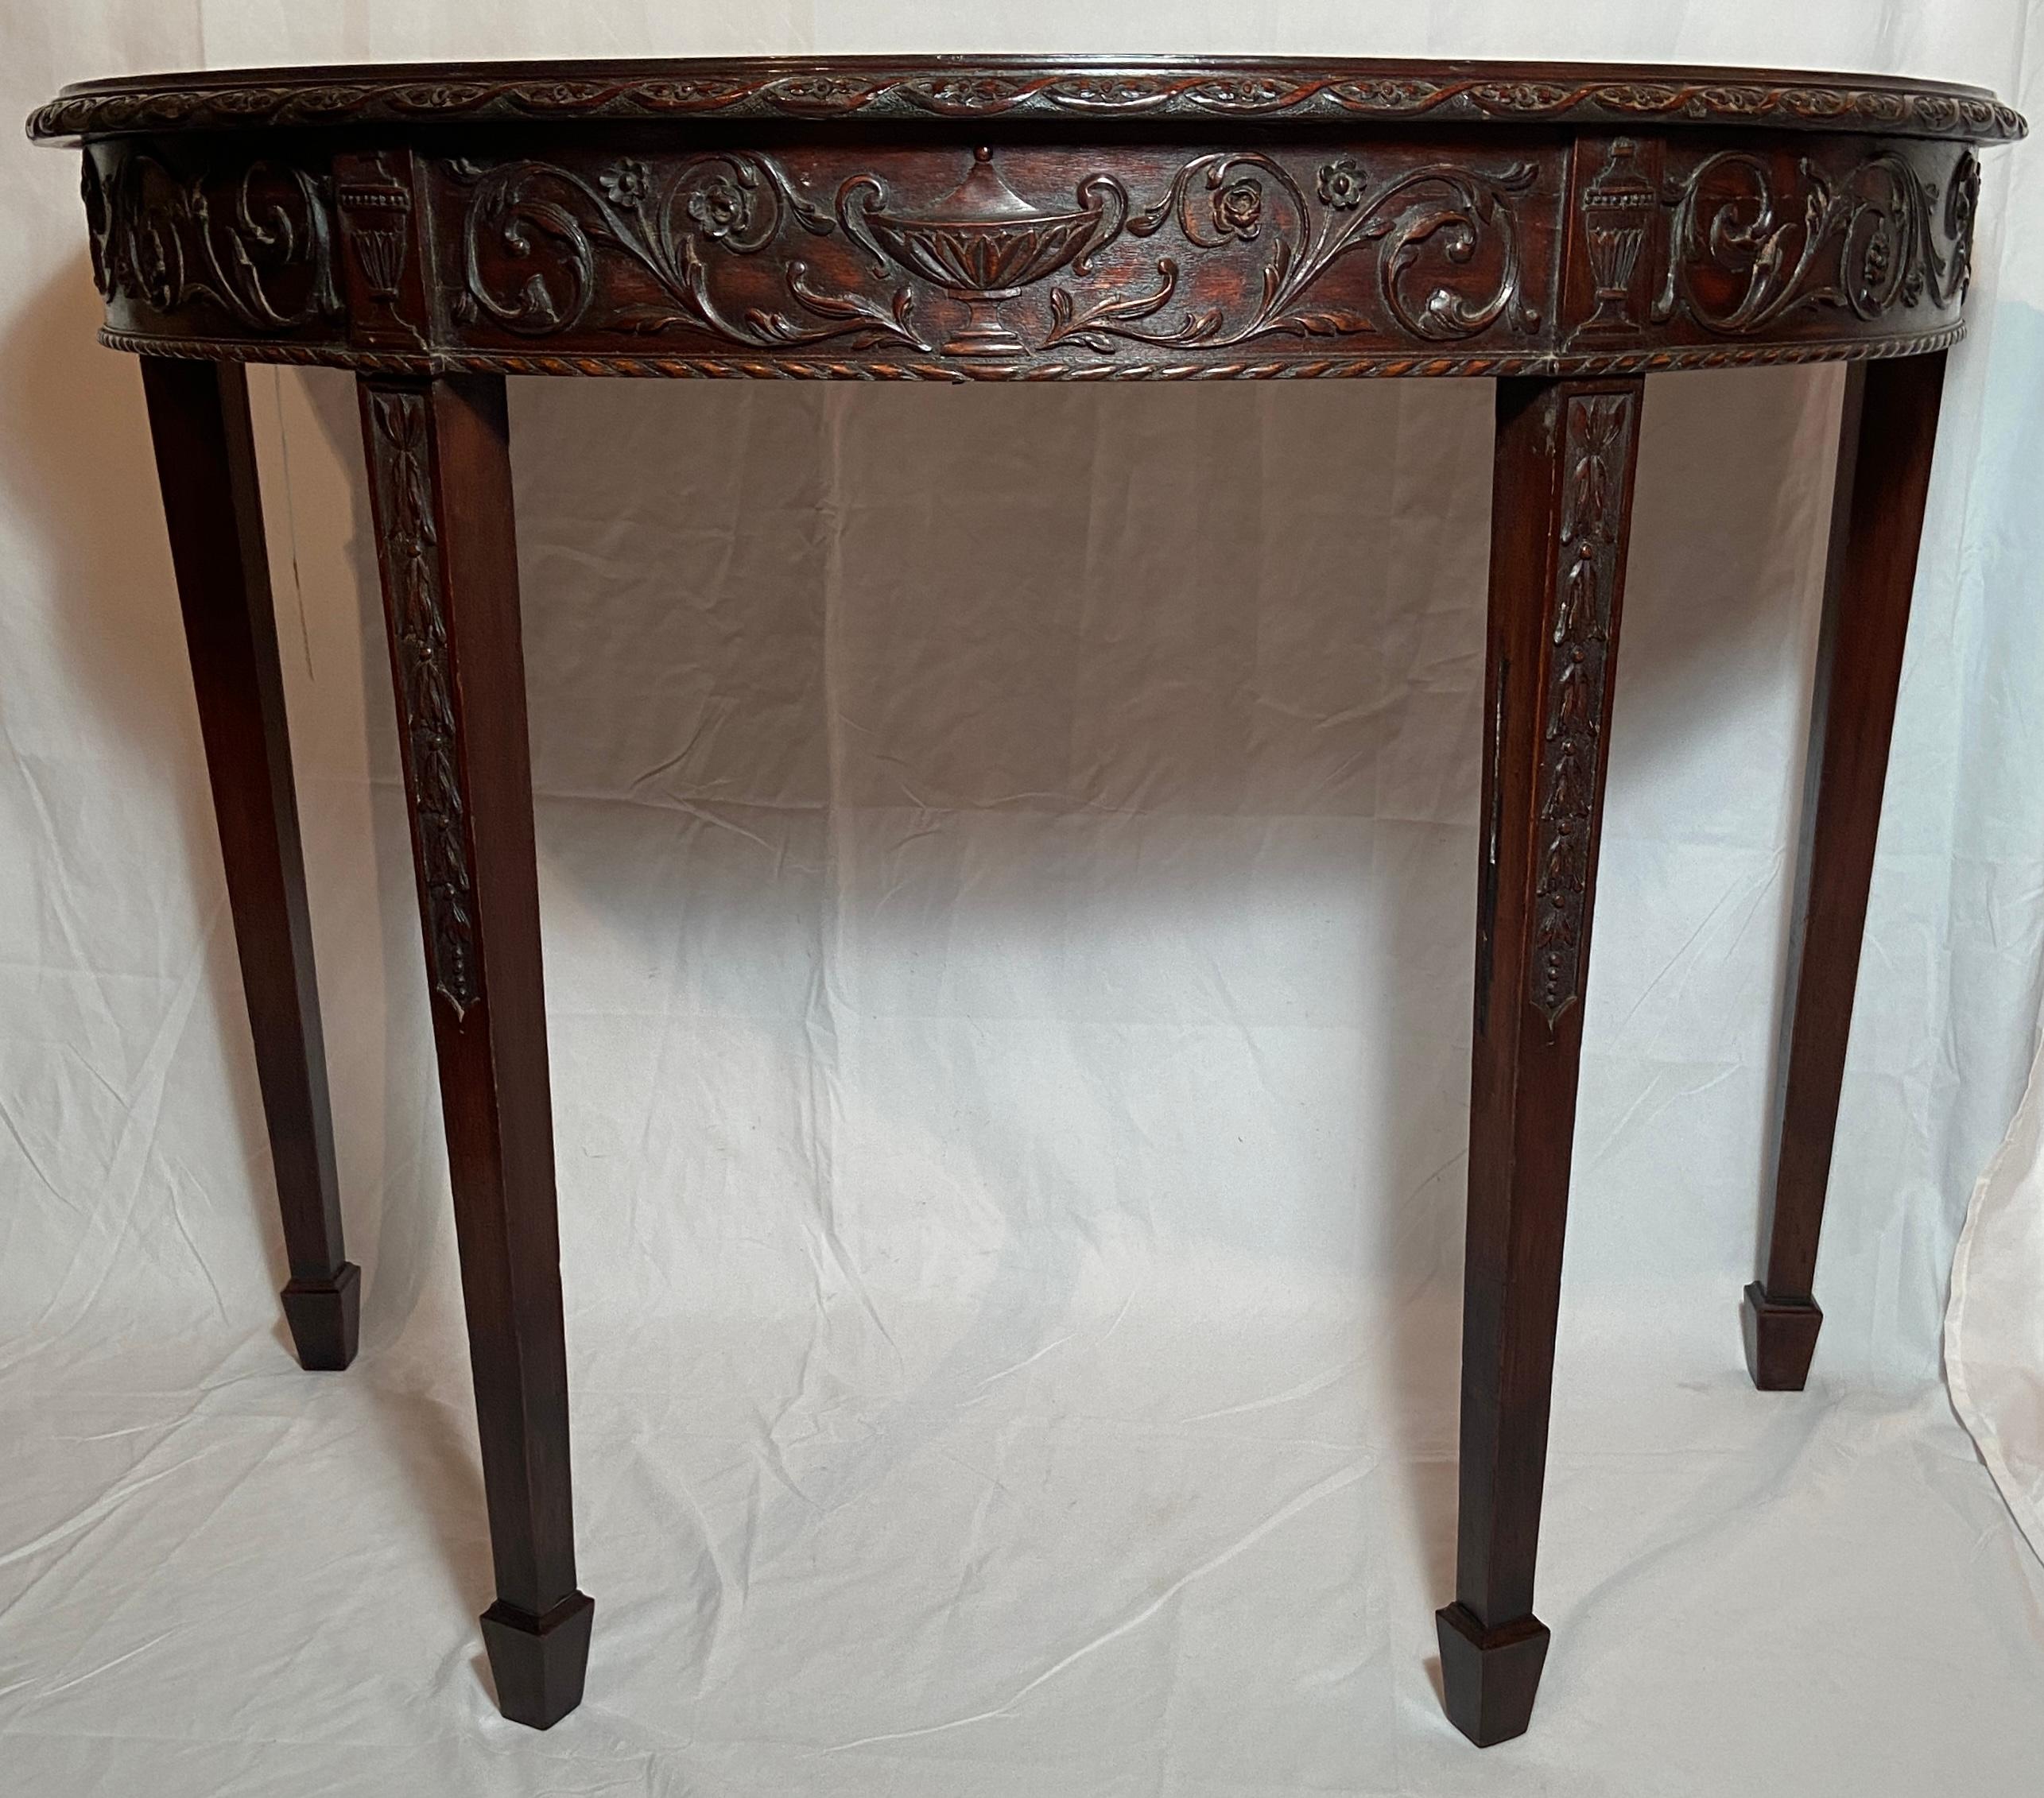 Pair antique English Inlaid Mahogany Demi-Lune console tables, Circa 1880's.
